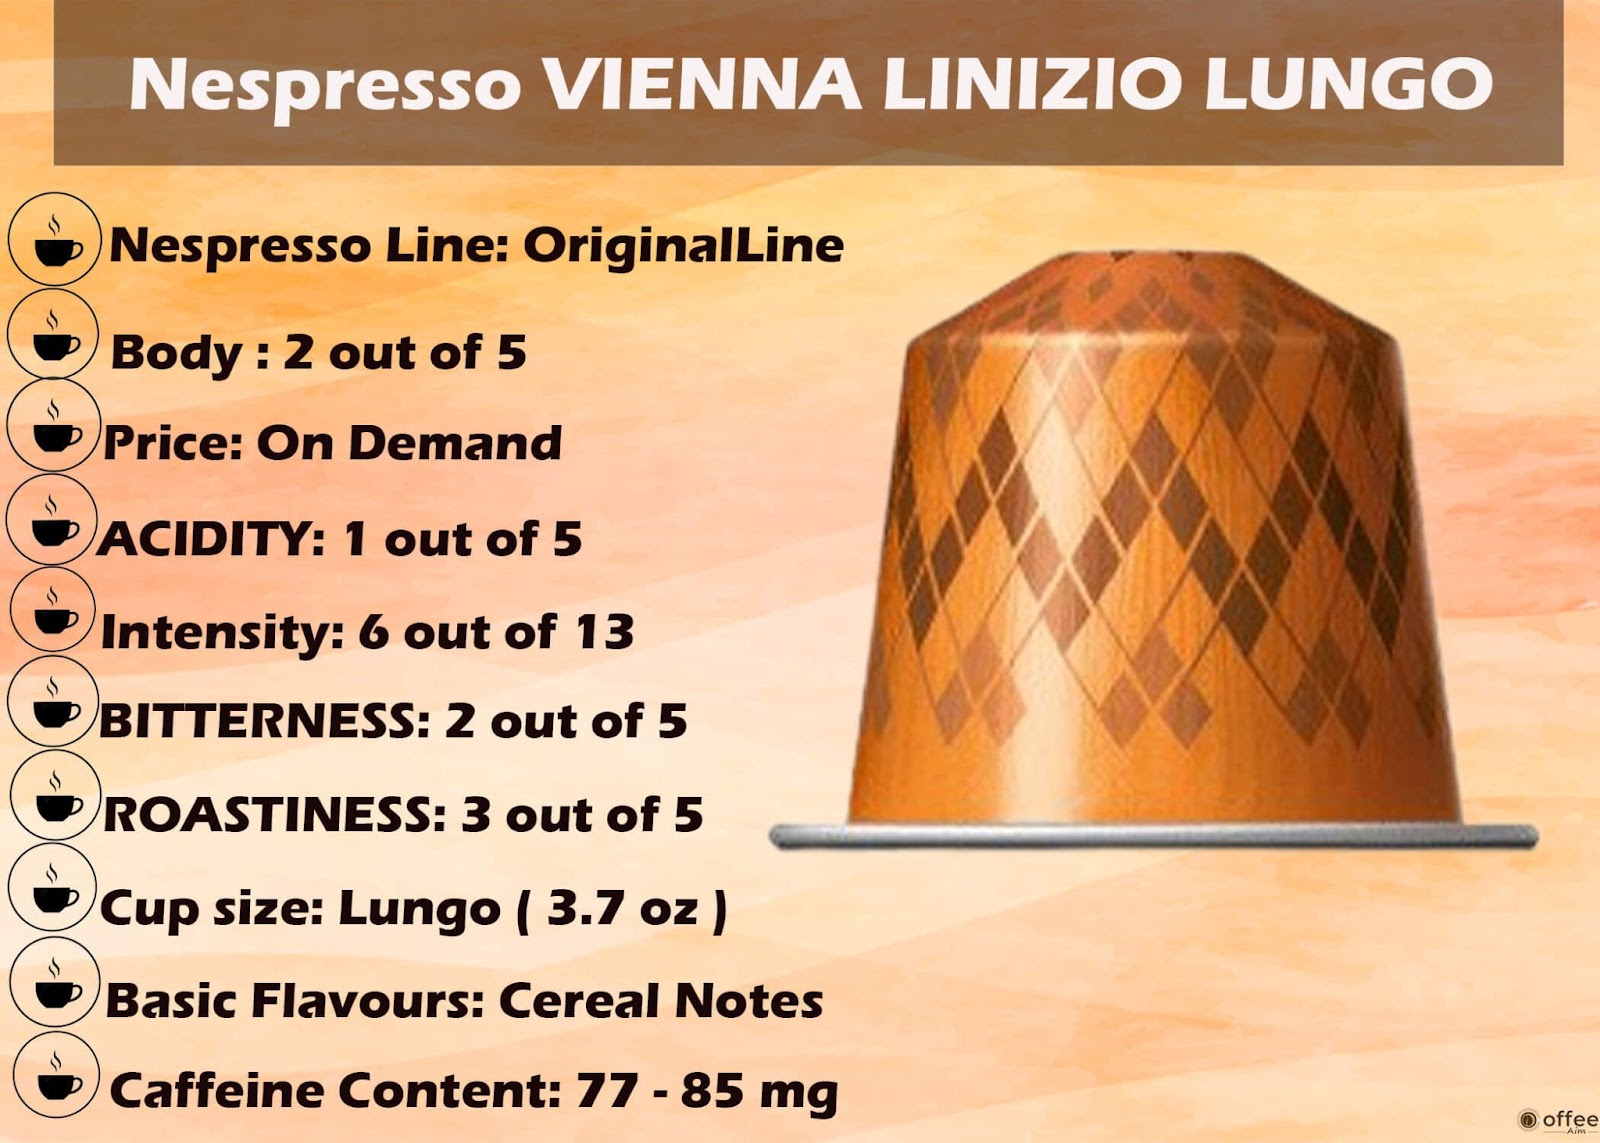 Features Chart of Nespresso Vienna Linizio Lungo Original Line Capsule.